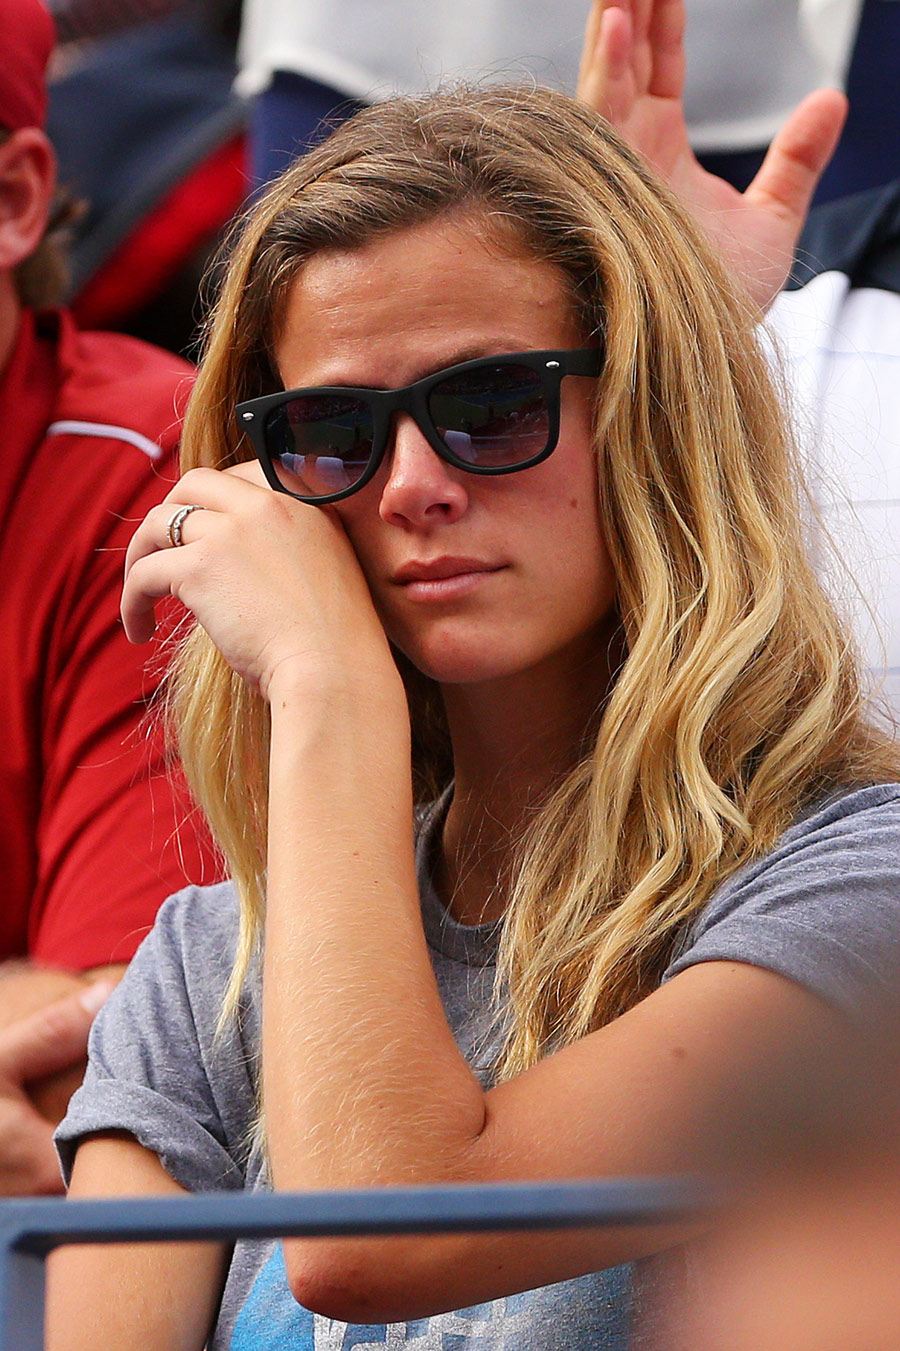 Andy Roddick's wife Brooklyn Decker sheds tears